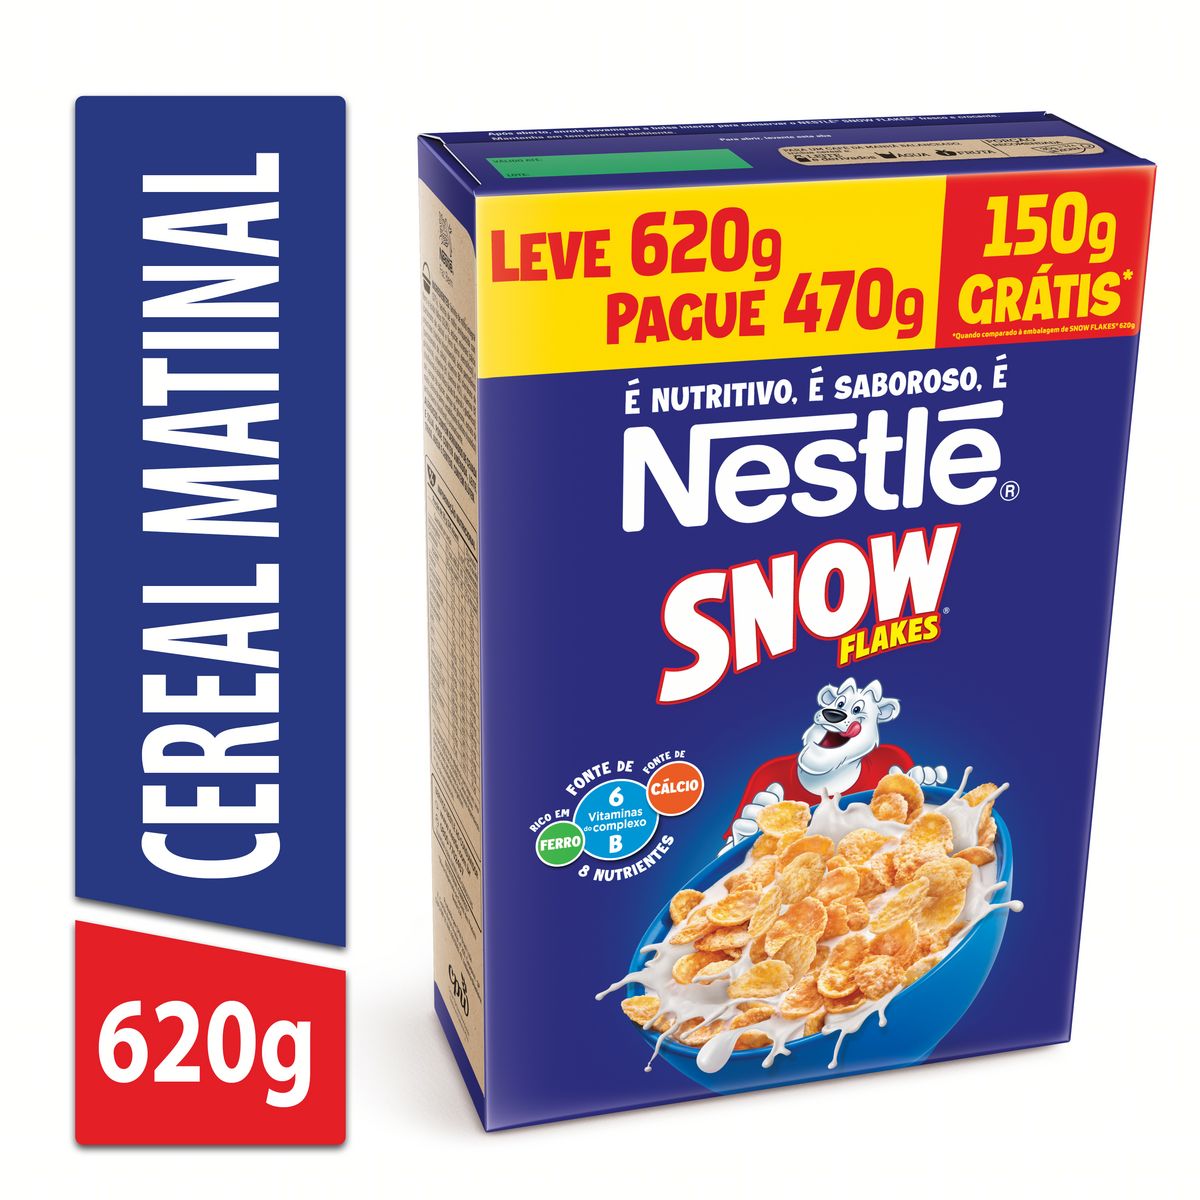 Cereal Matinal Snow Flakes Caixa Leve 620g Pague 470g